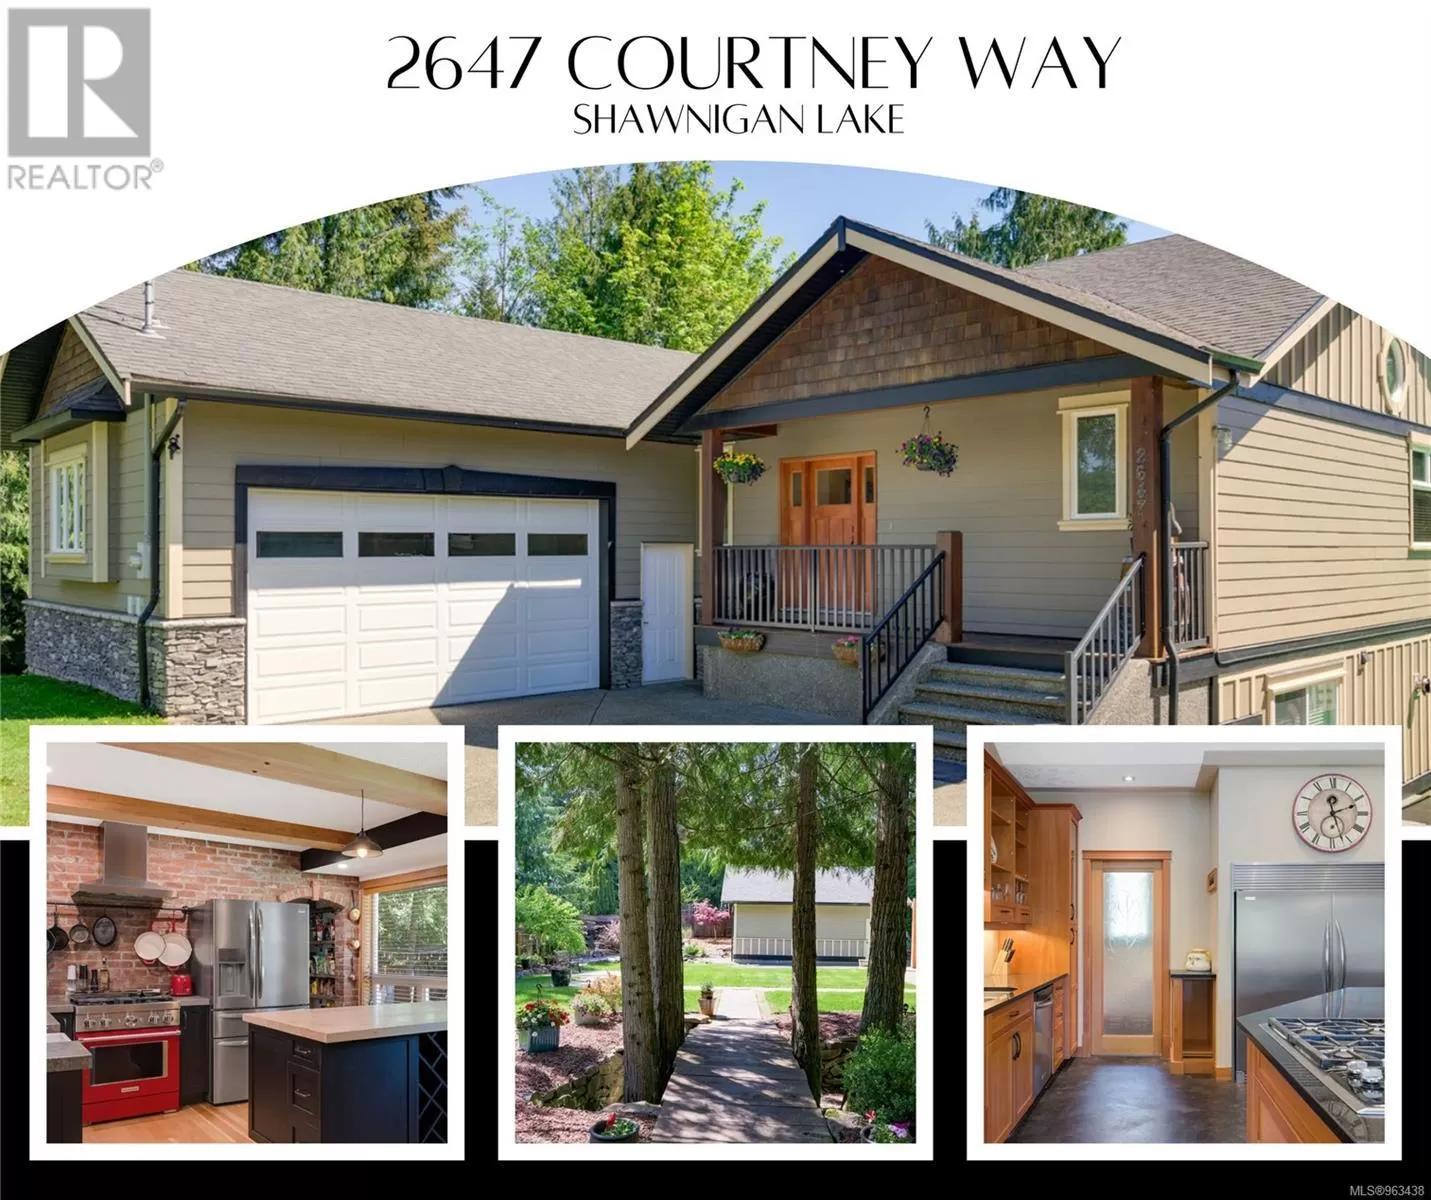 House for rent: 2647 Courtney Way, Shawnigan Lake, British Columbia V0R 2W0